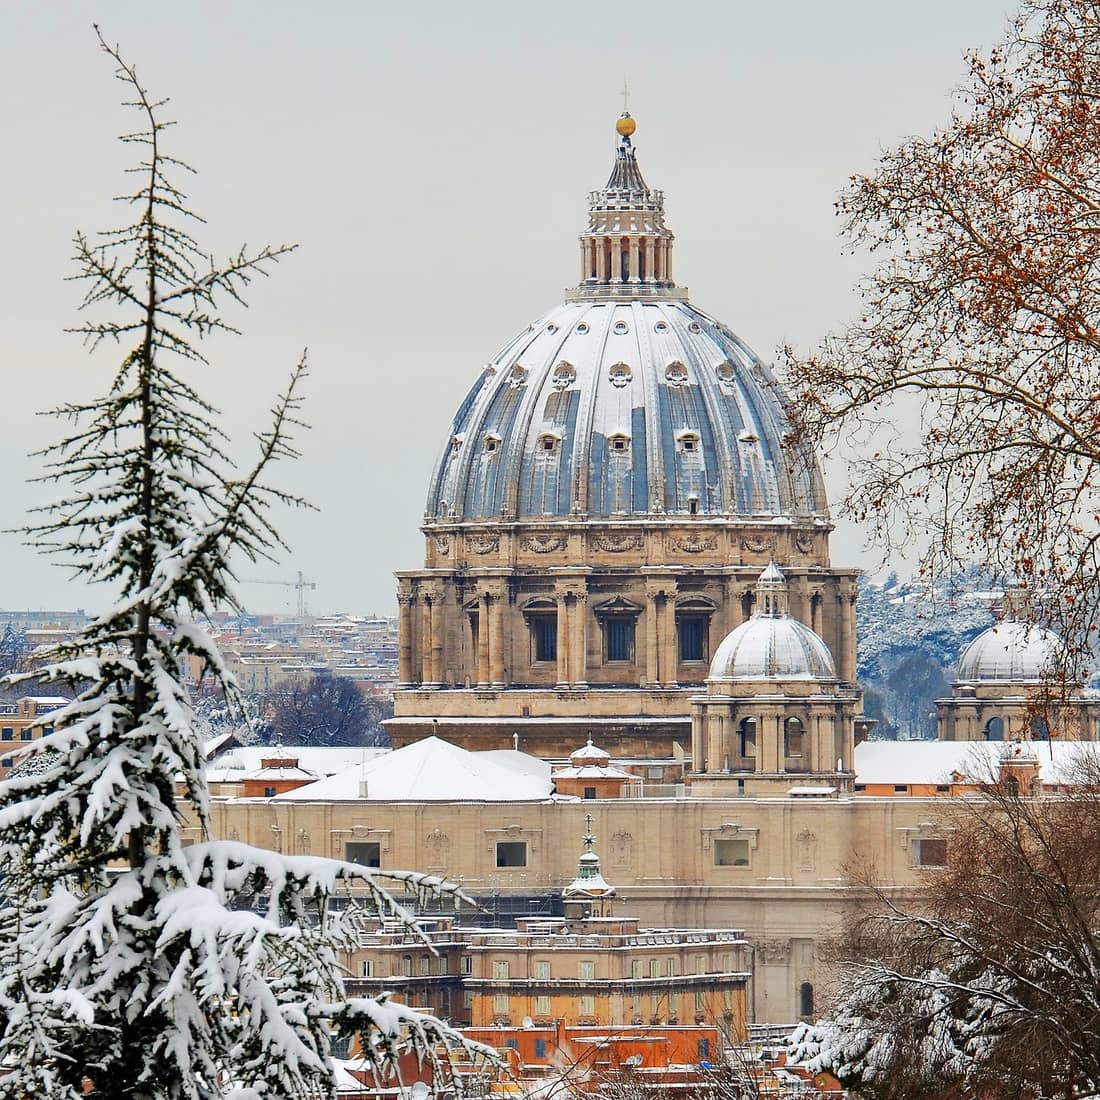 Rome Under Snow